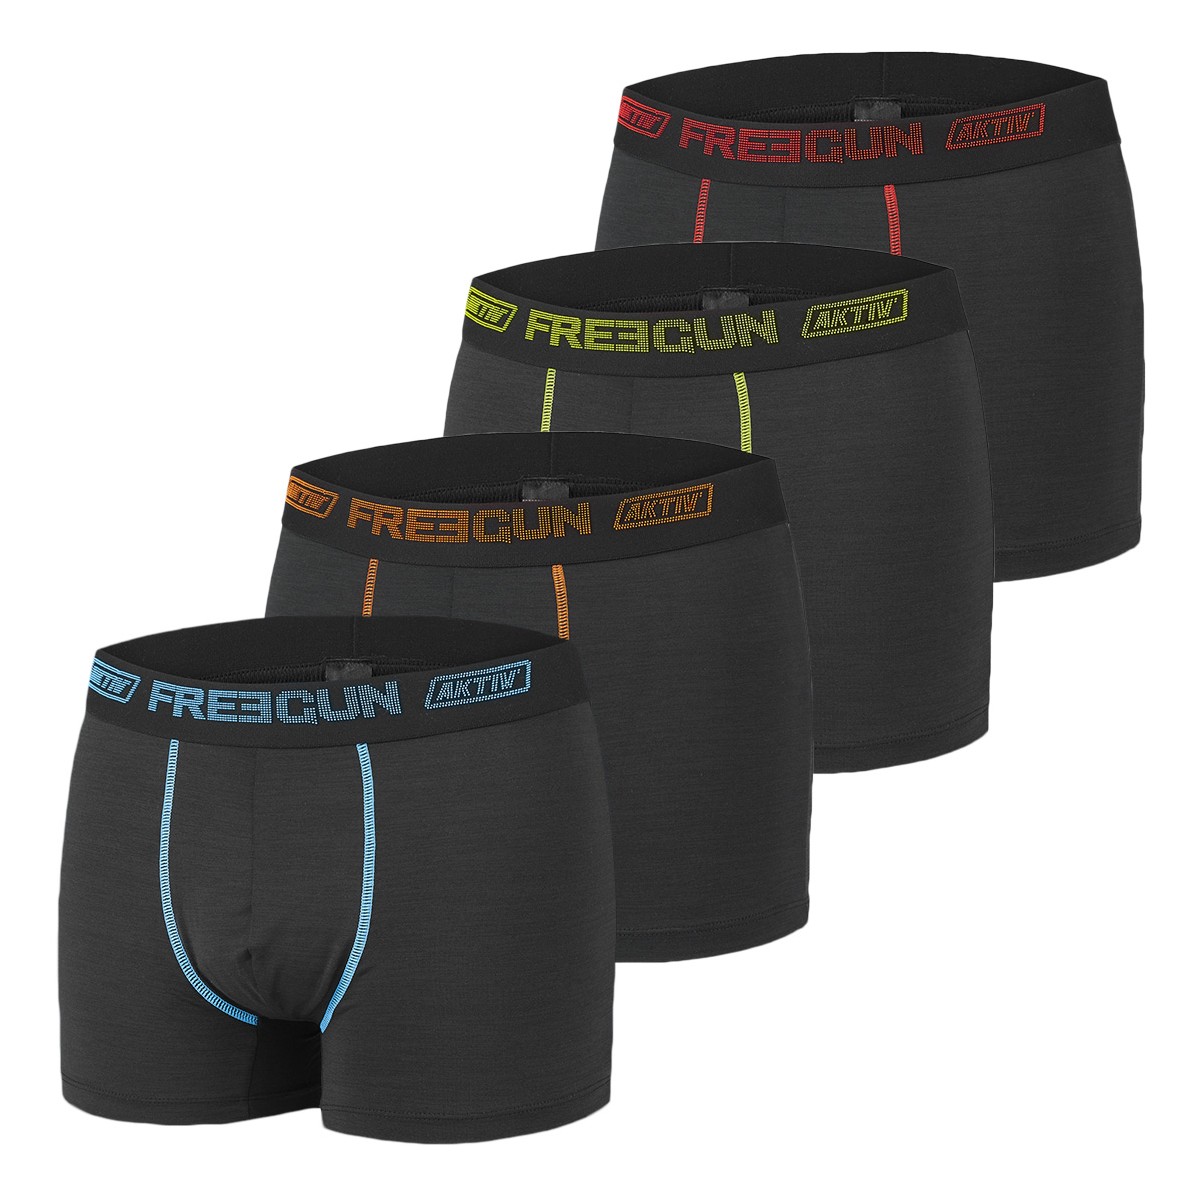 FREEGUN - The Coolest Underwear Brand on the Planet